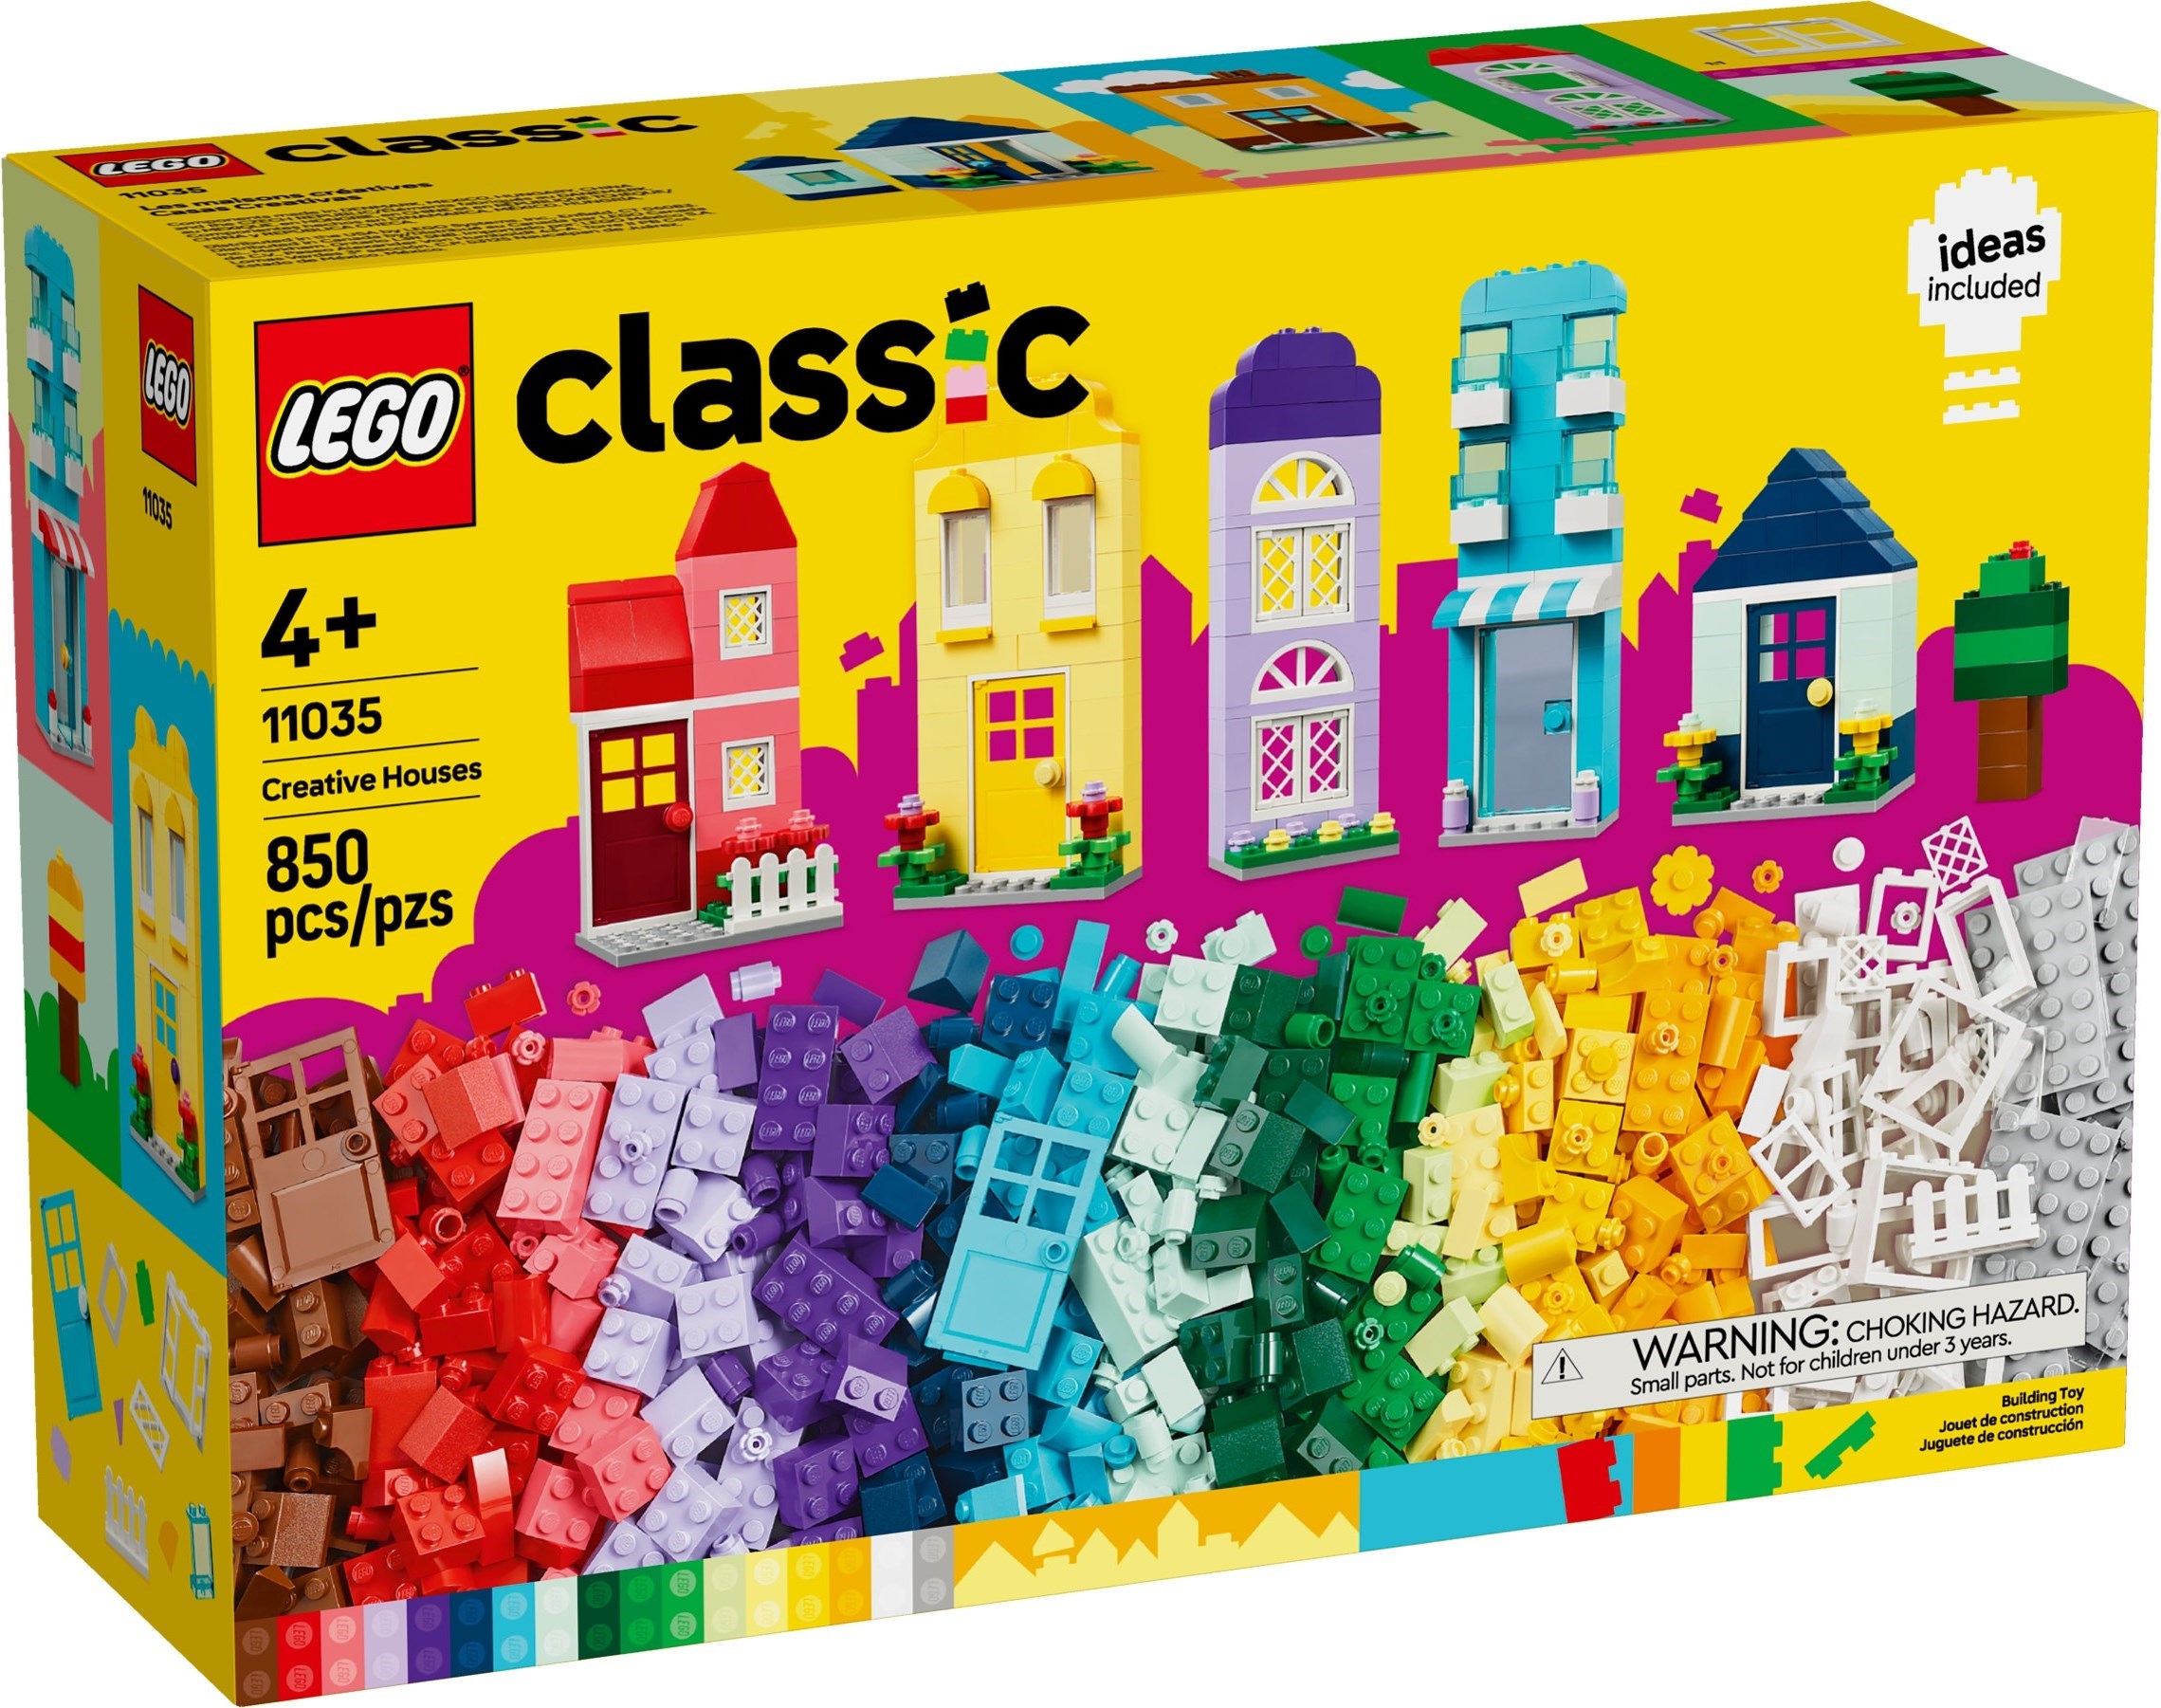 LEGO Classic Creative Color Fun 11032 Creative Building Set, Build